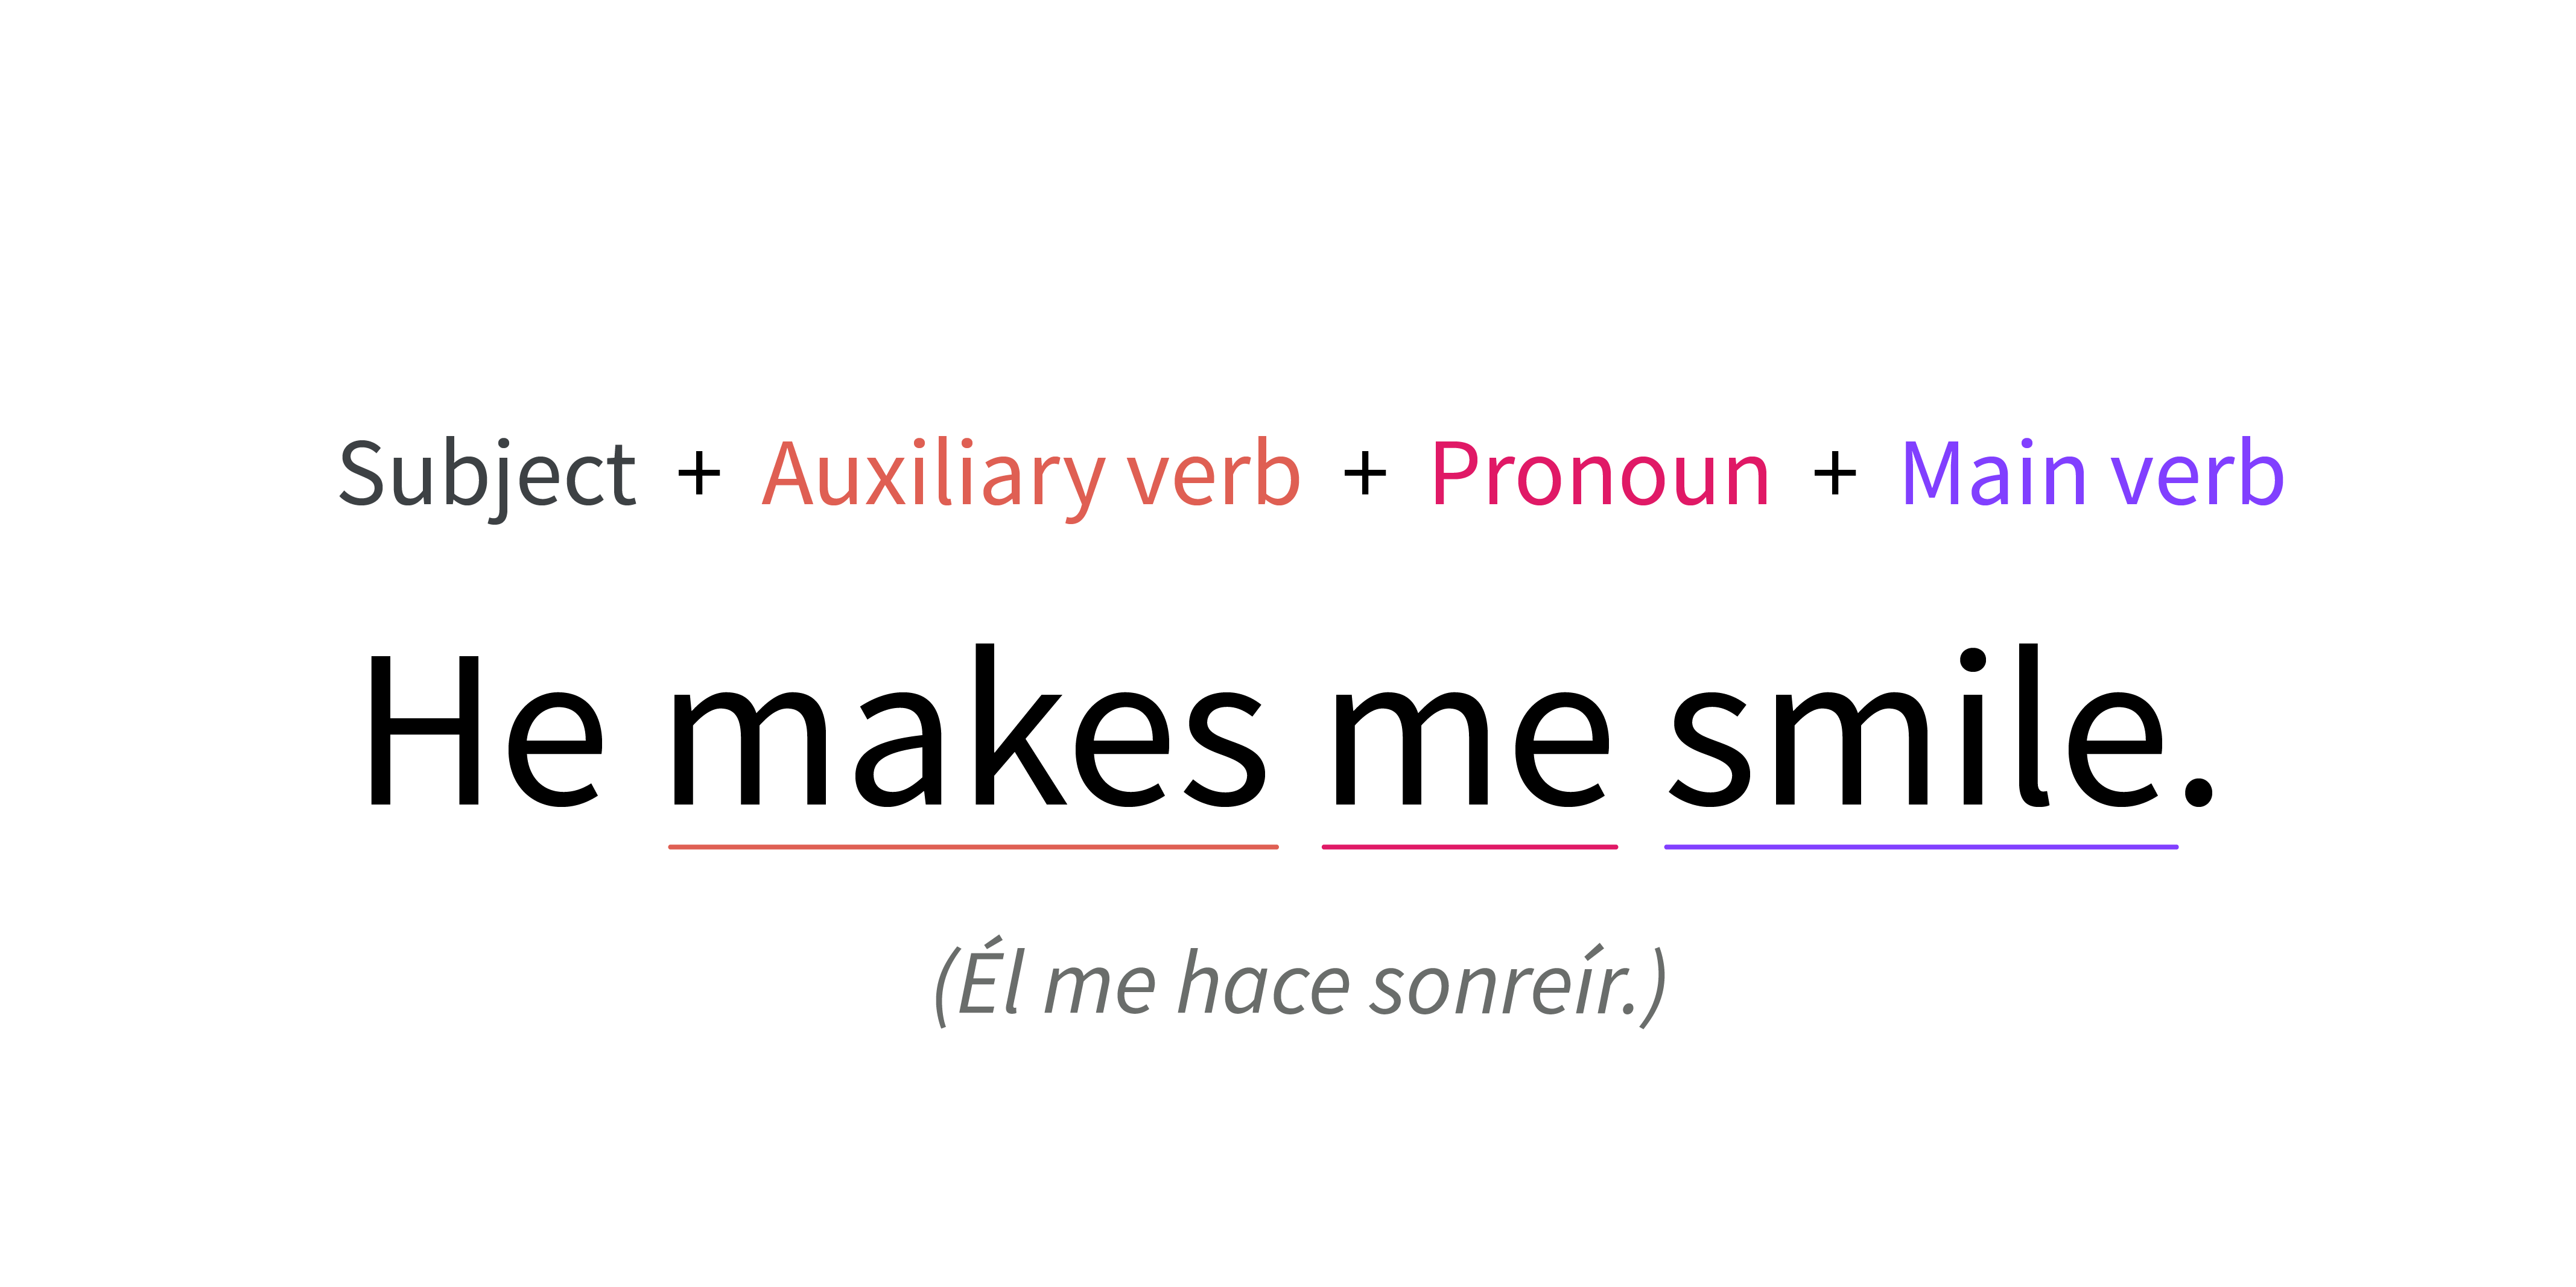 Imagen ejemplo de Verb + Pronoun + Main verb